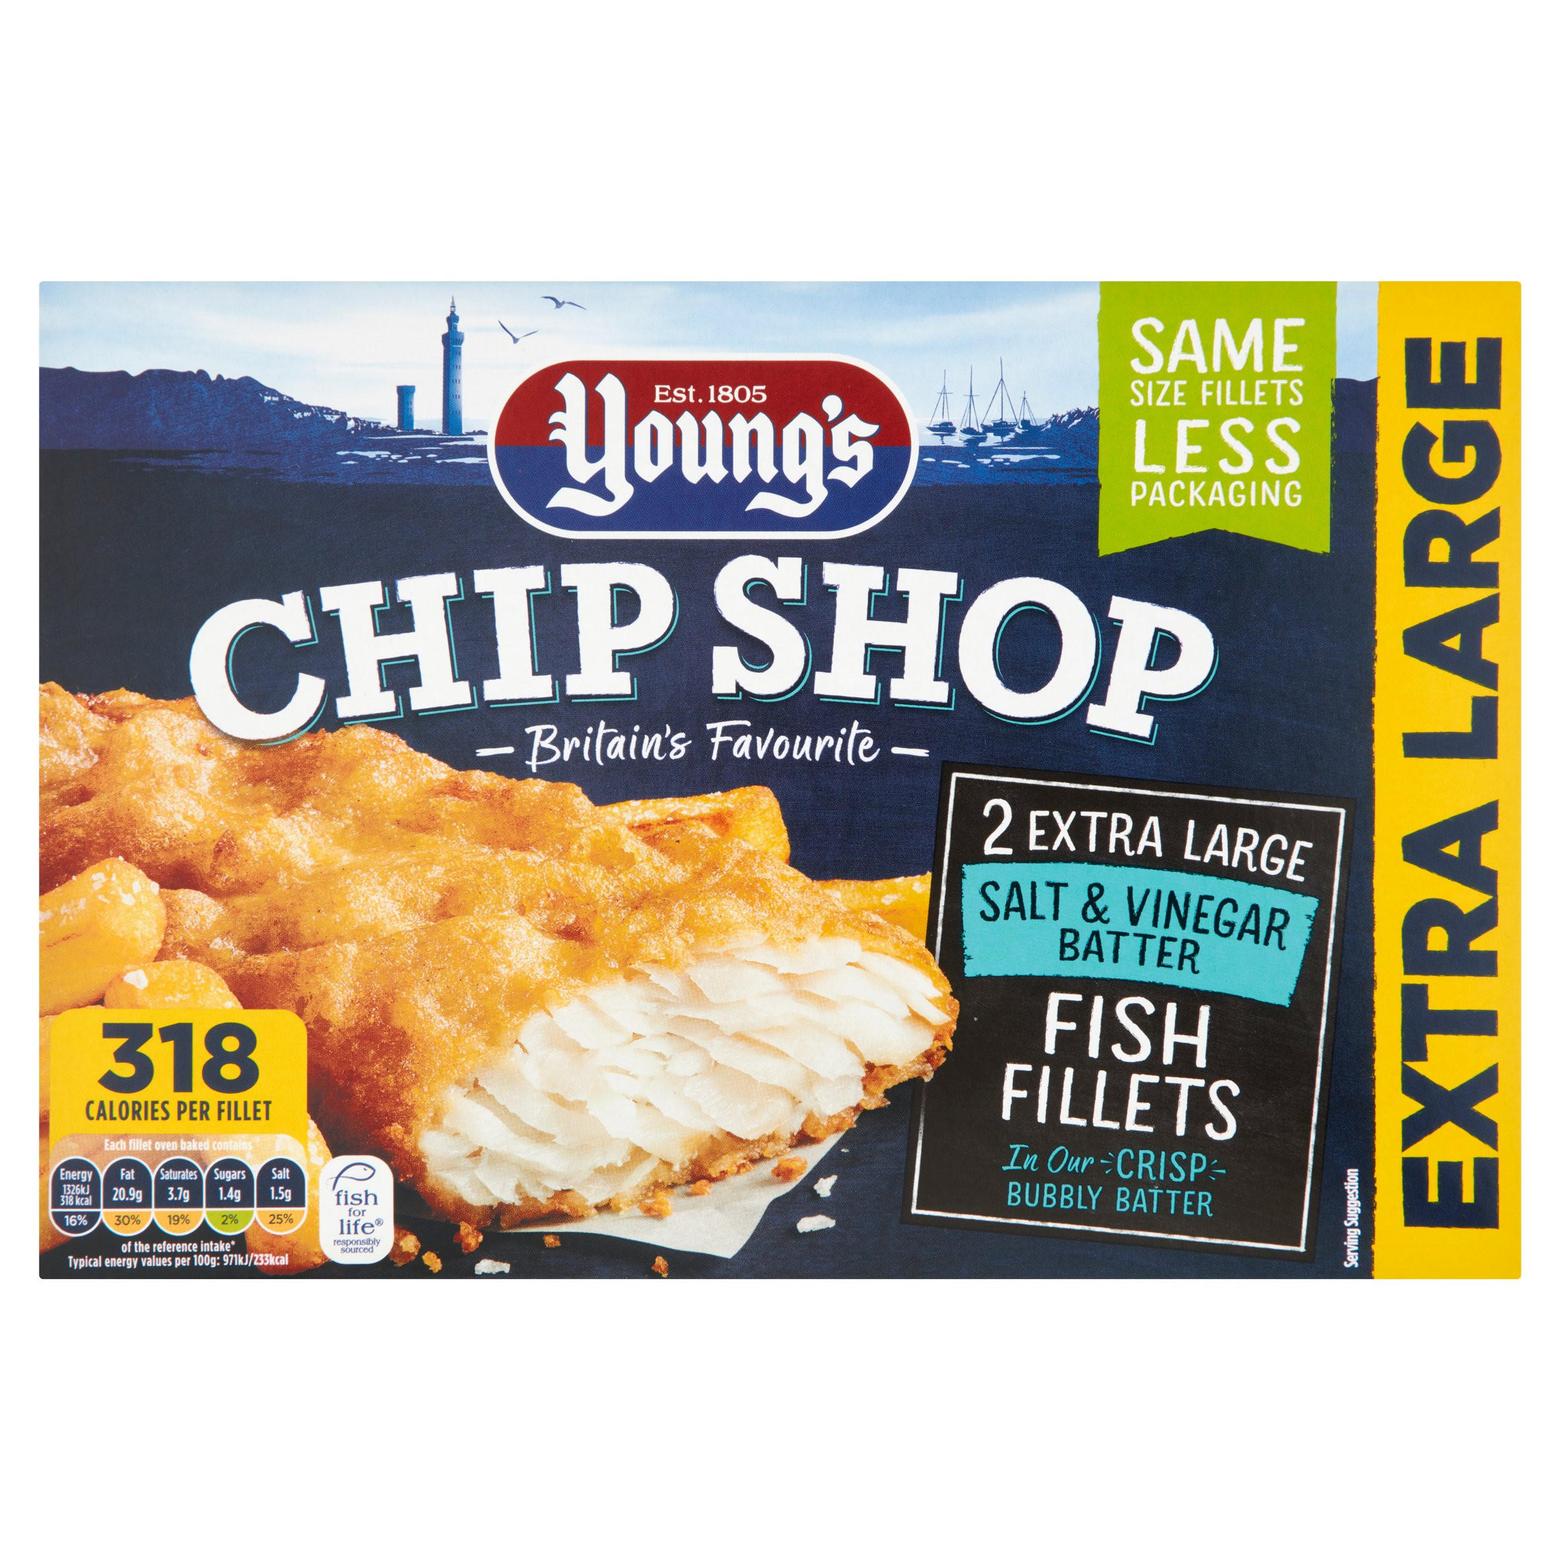 Young's Chip Shop 2 Extra Large Salt & Vinegar Batter Fish Fillets 300g offers at £3.5 in Iceland